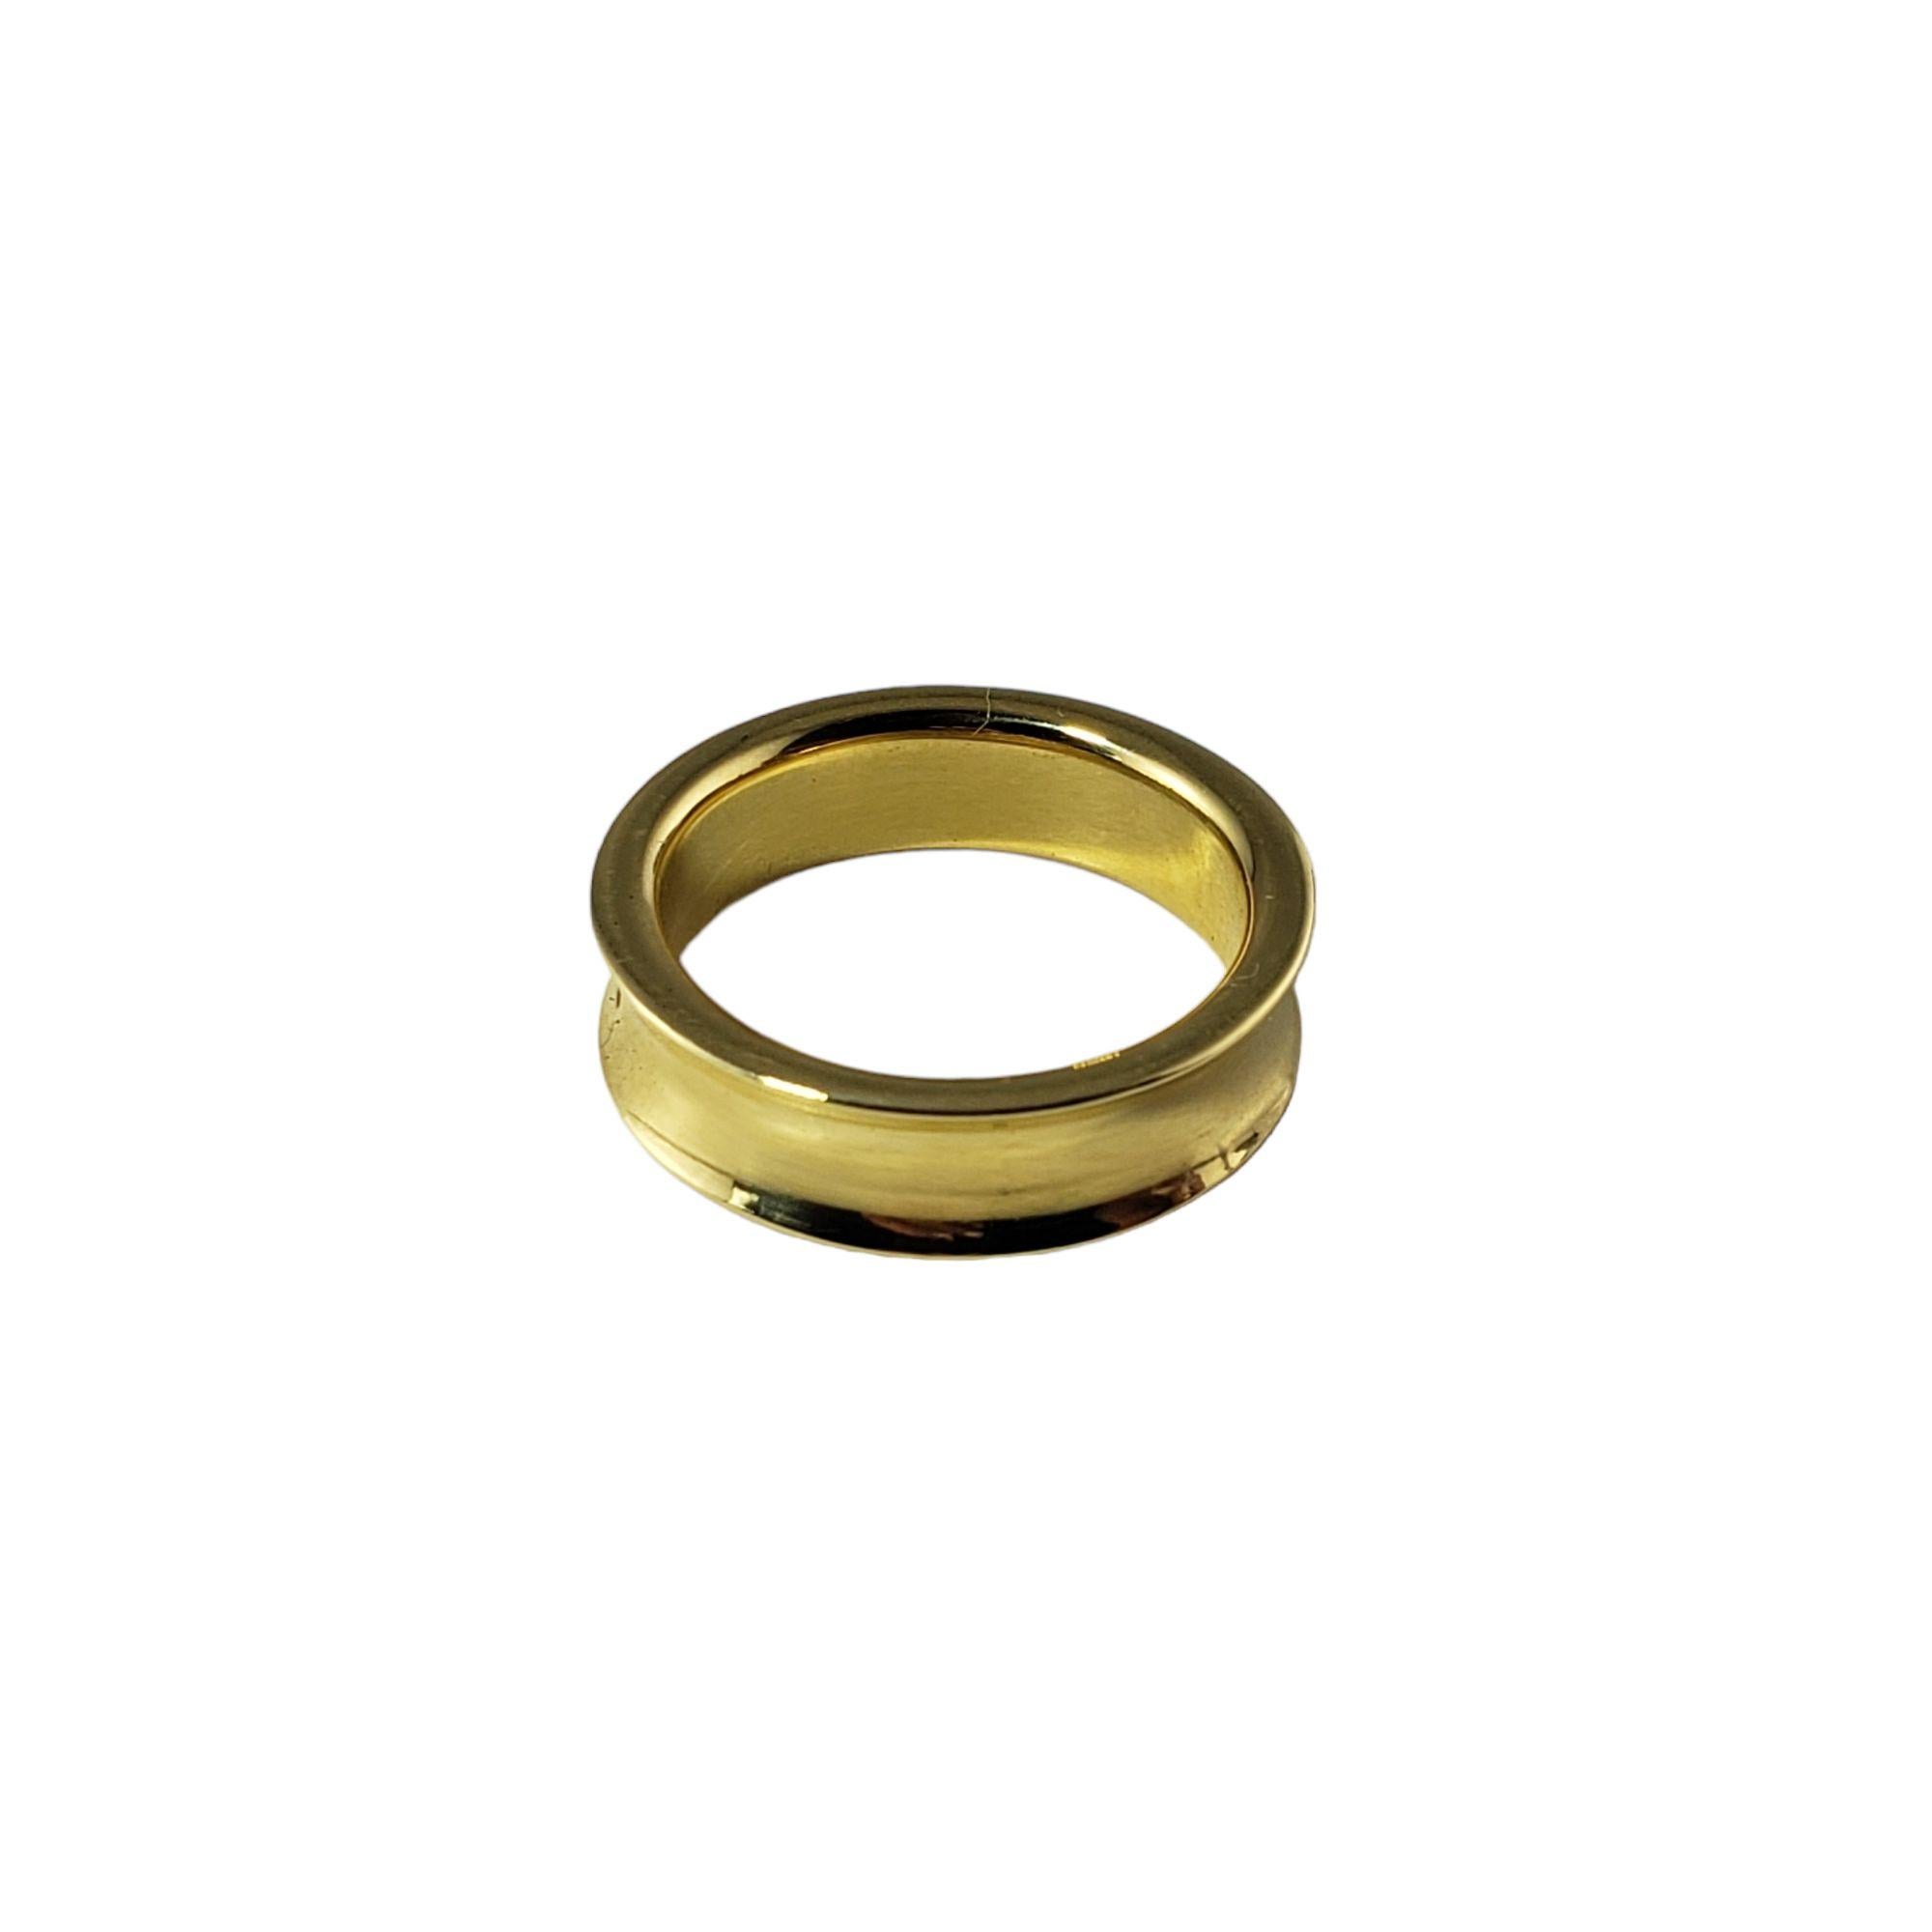  Tiffany & Co. 1837 18 Karat Yellow Gold Band Ring Size 7.5 3